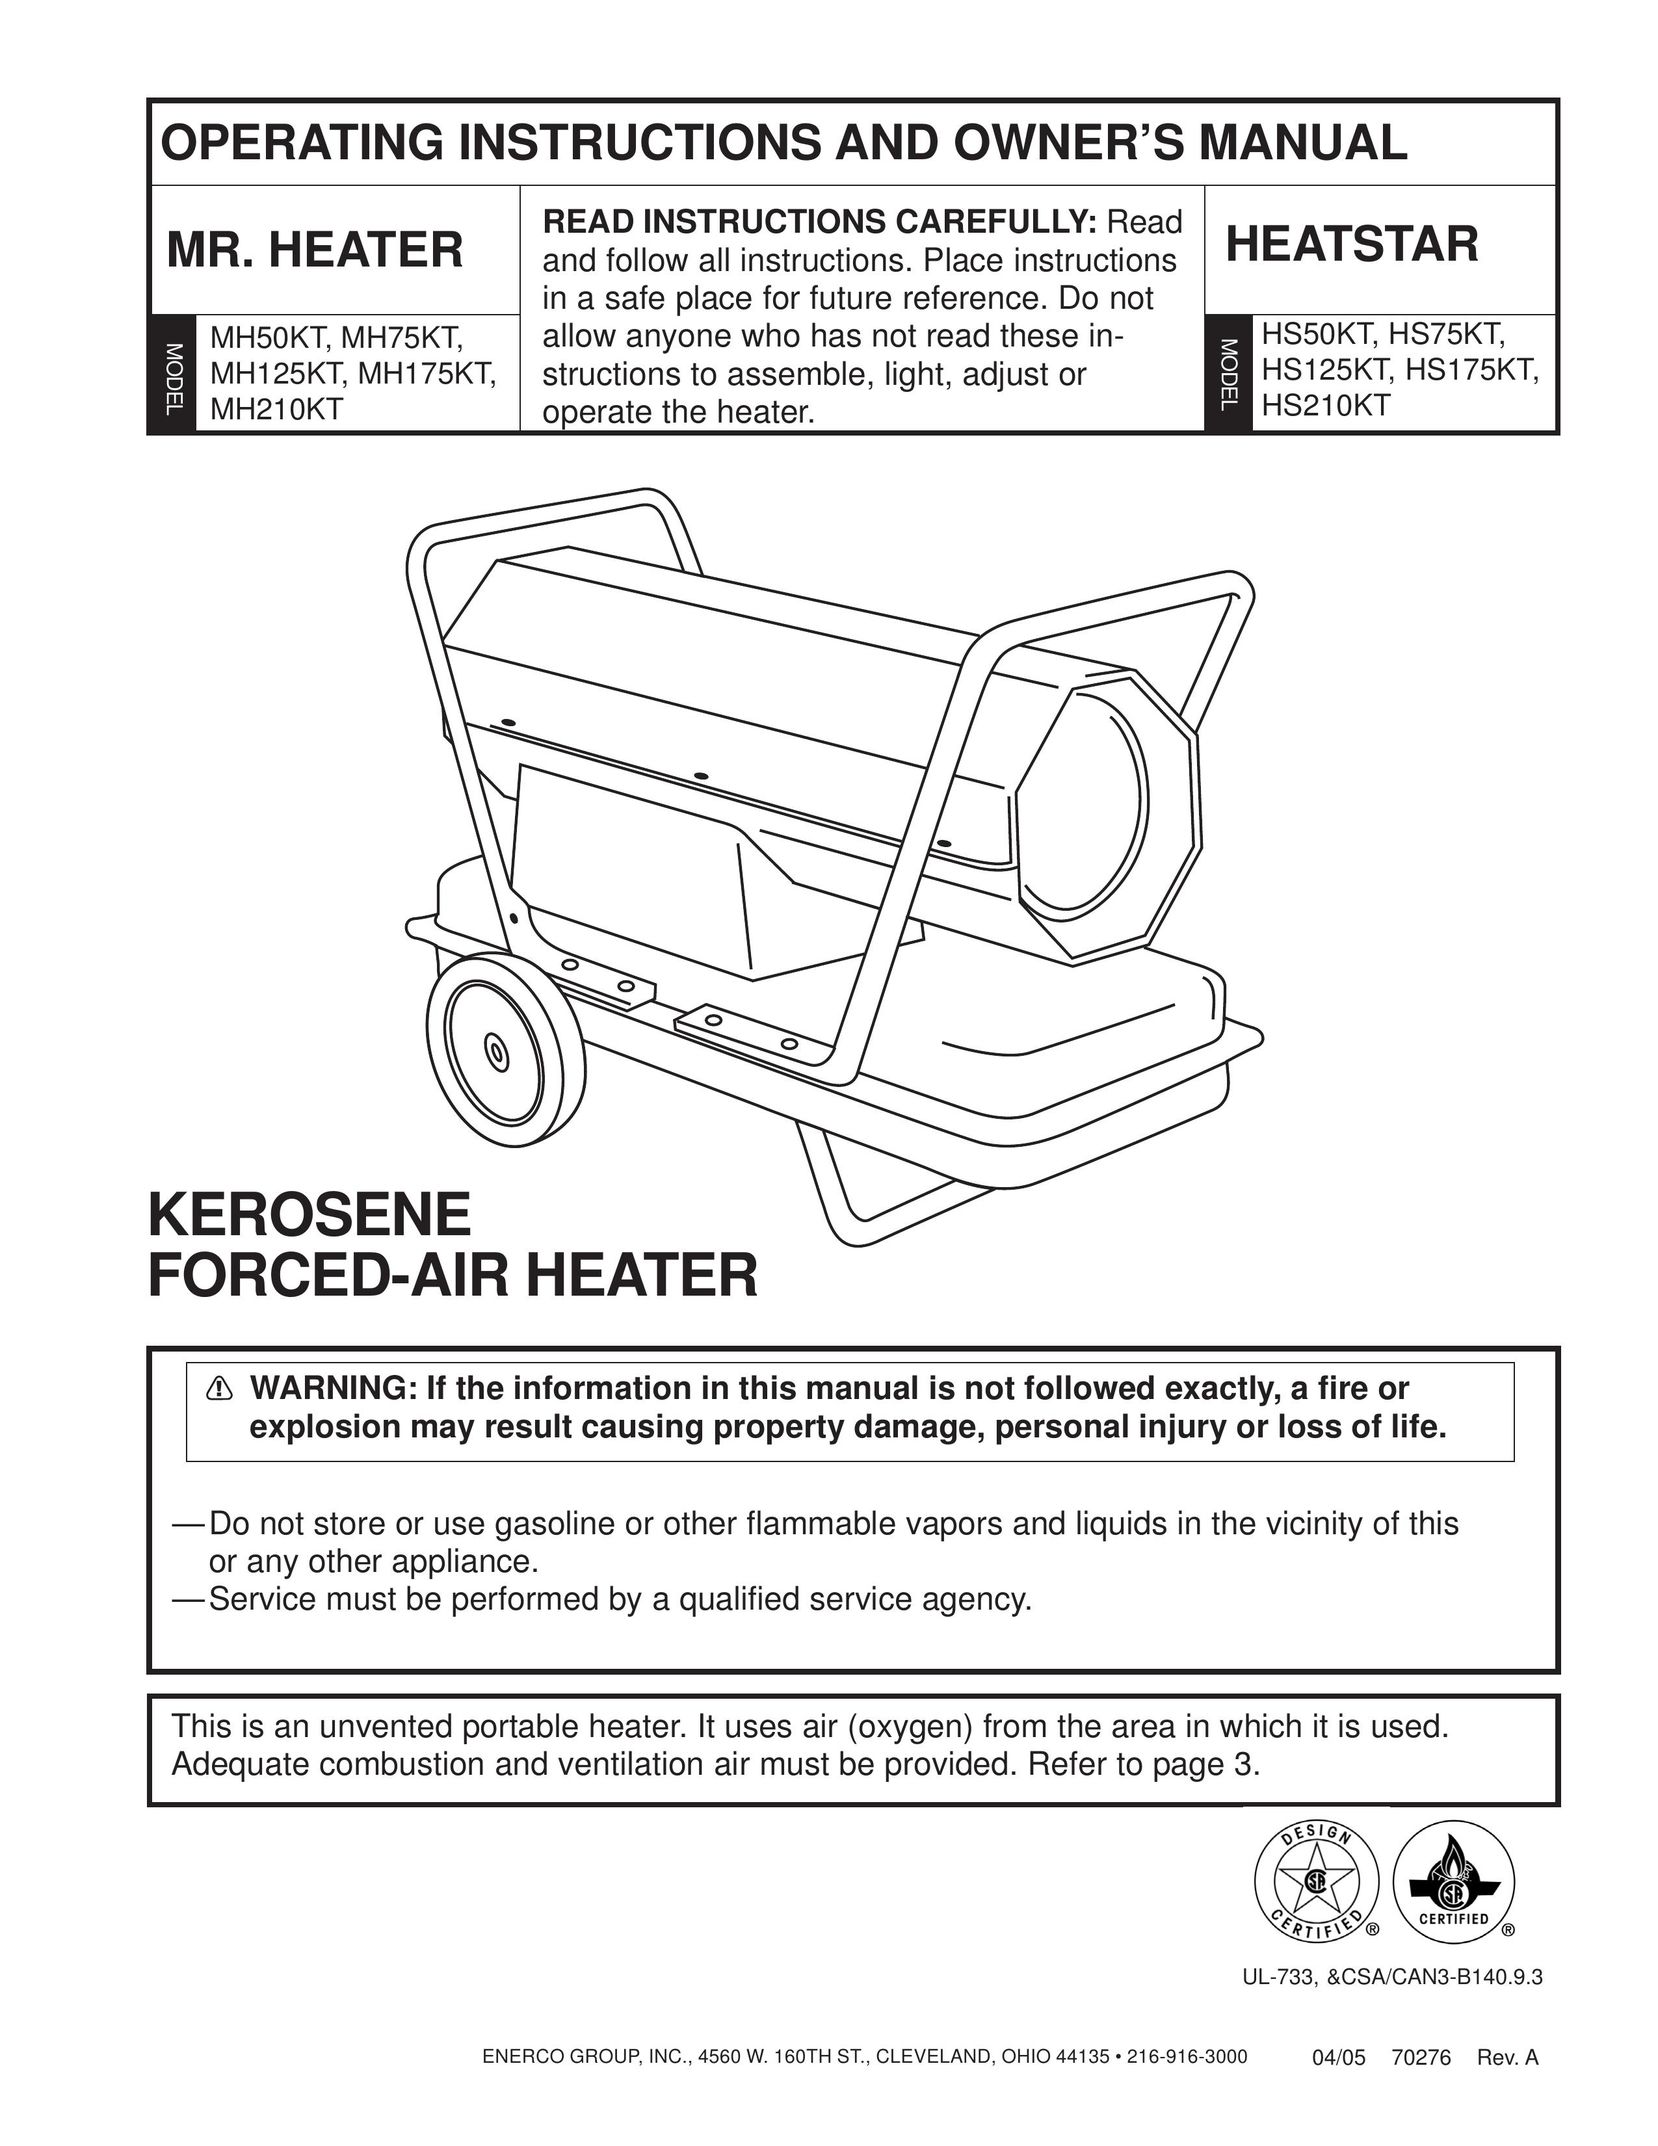 Enerco HS175KT Gas Heater User Manual